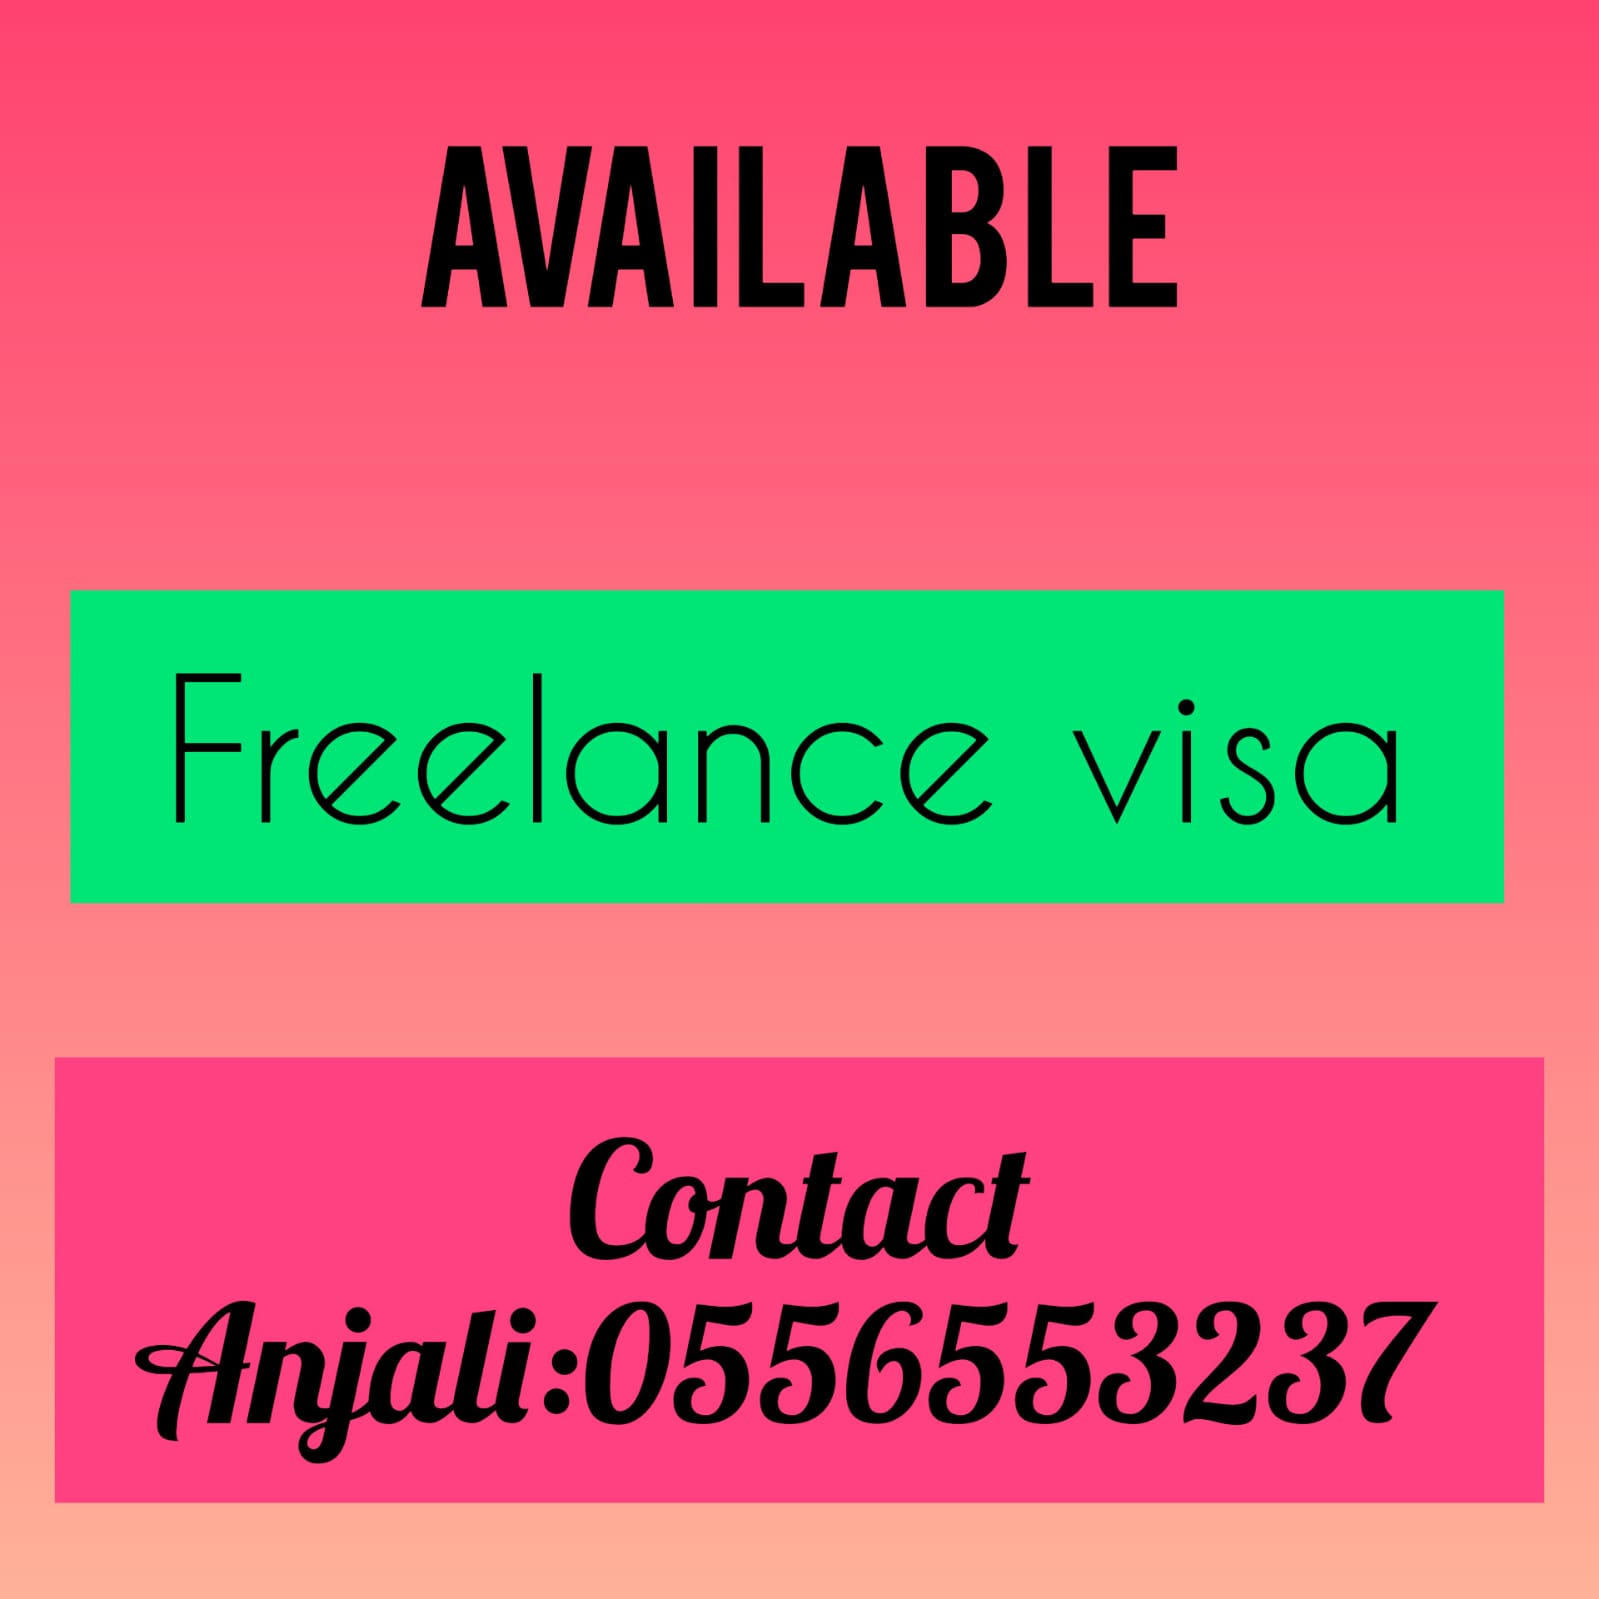 freelance visa available in Dubai